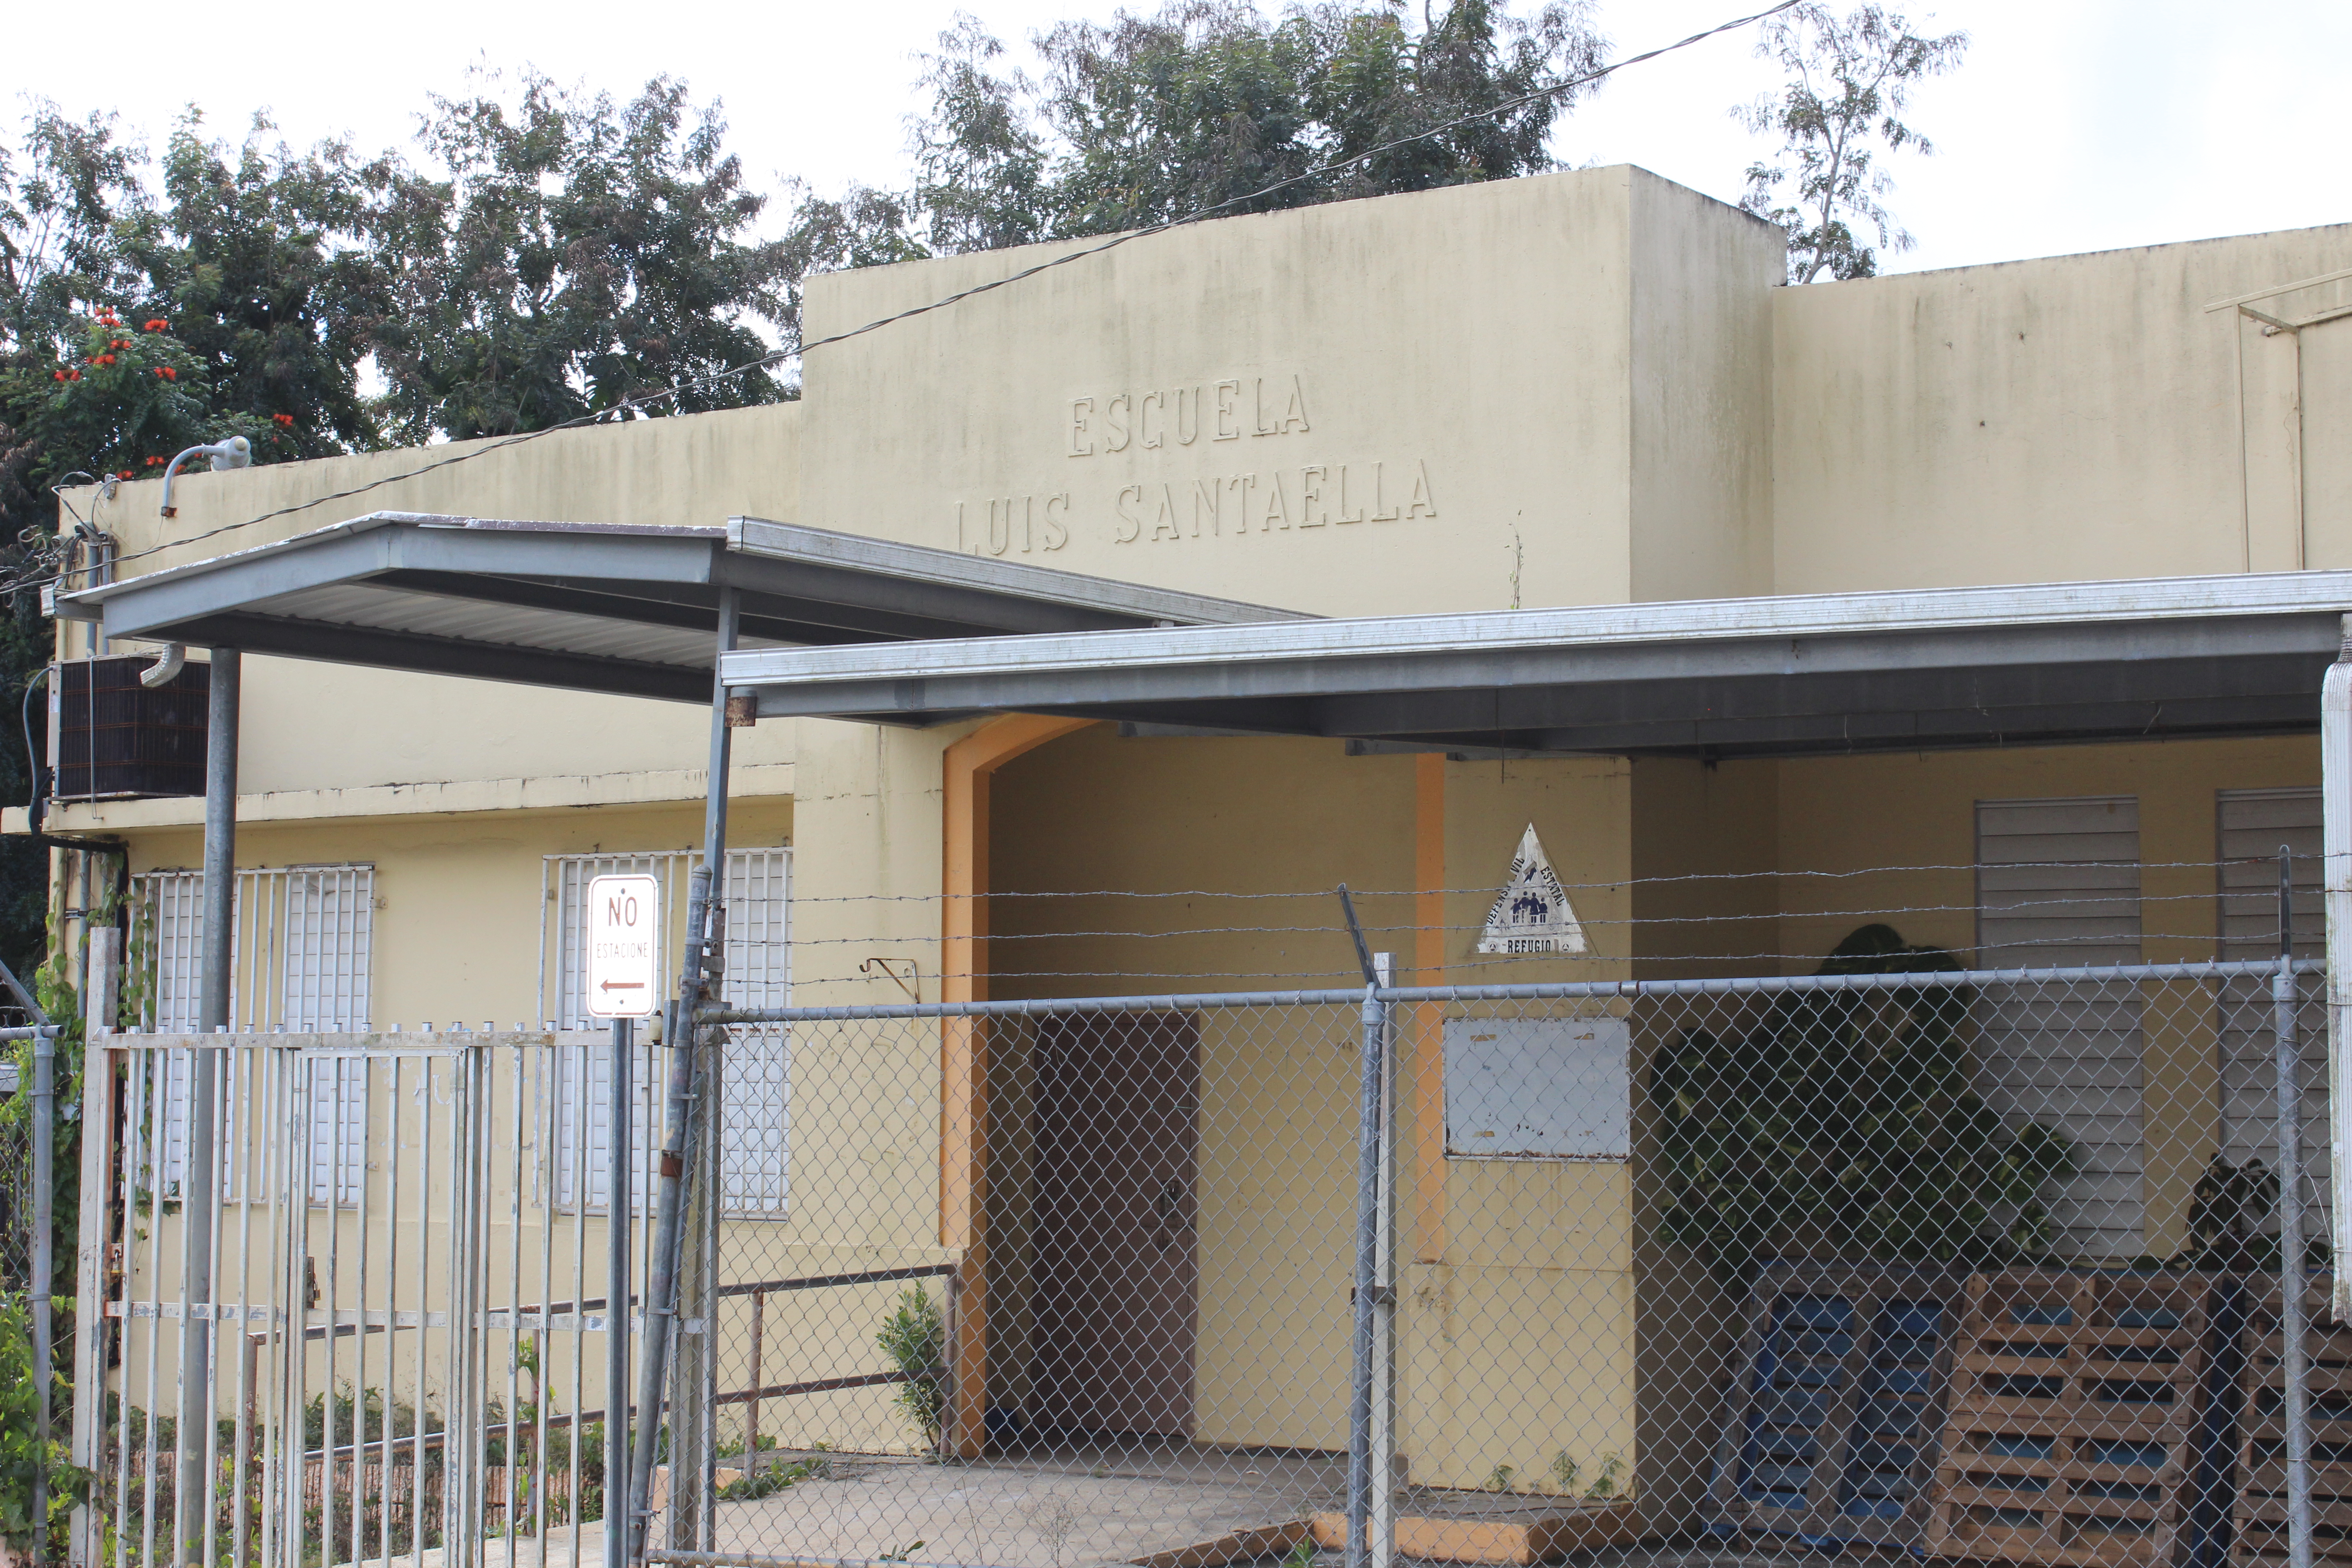 Picture shows Escuela Luis Santaella, a shut down school outside of San Juan, Puerto Rico